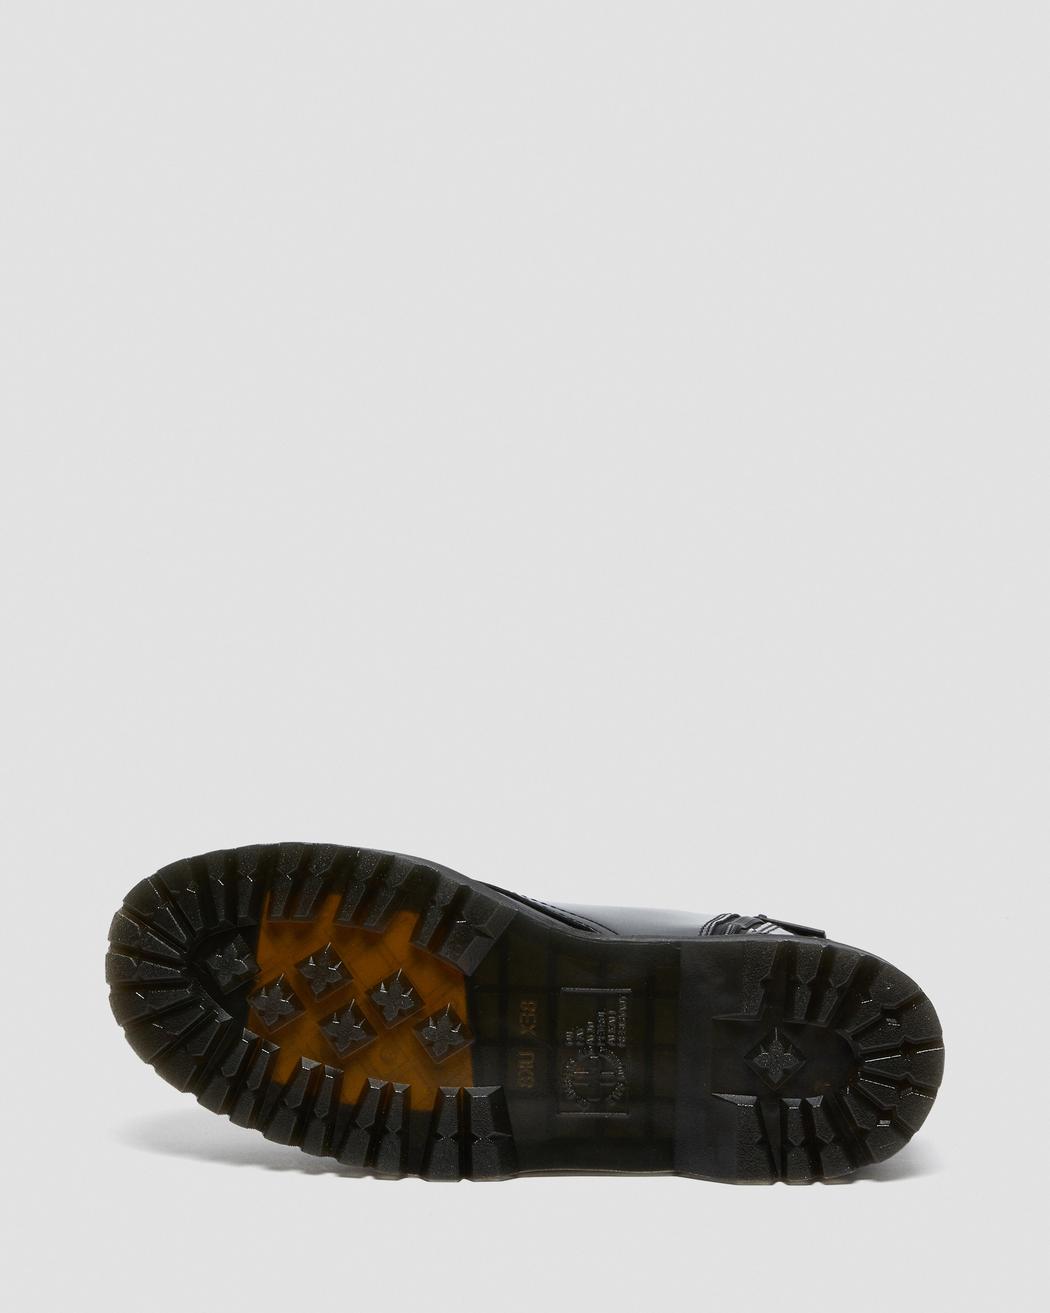 Jadon Black Patent Leather Platform Boots DM26646001 - 10